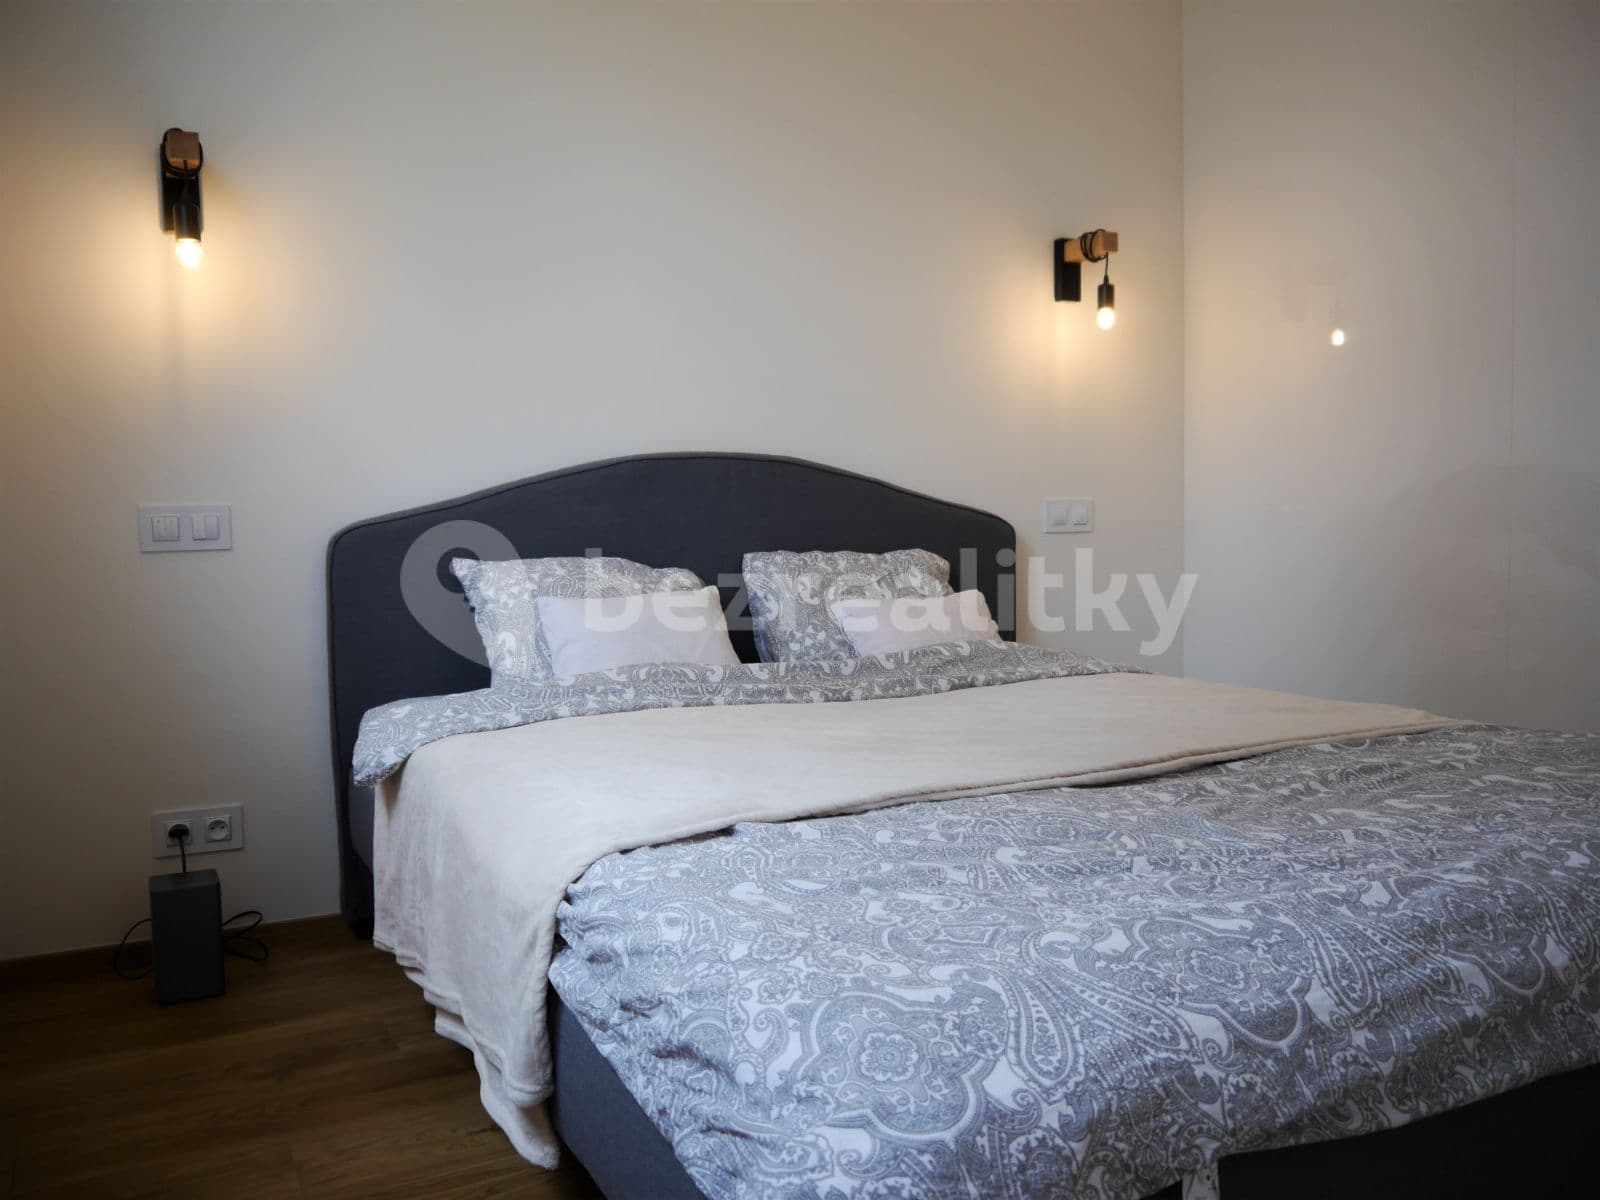 1 bedroom with open-plan kitchen flat to rent, 52 m², Prague, Prague